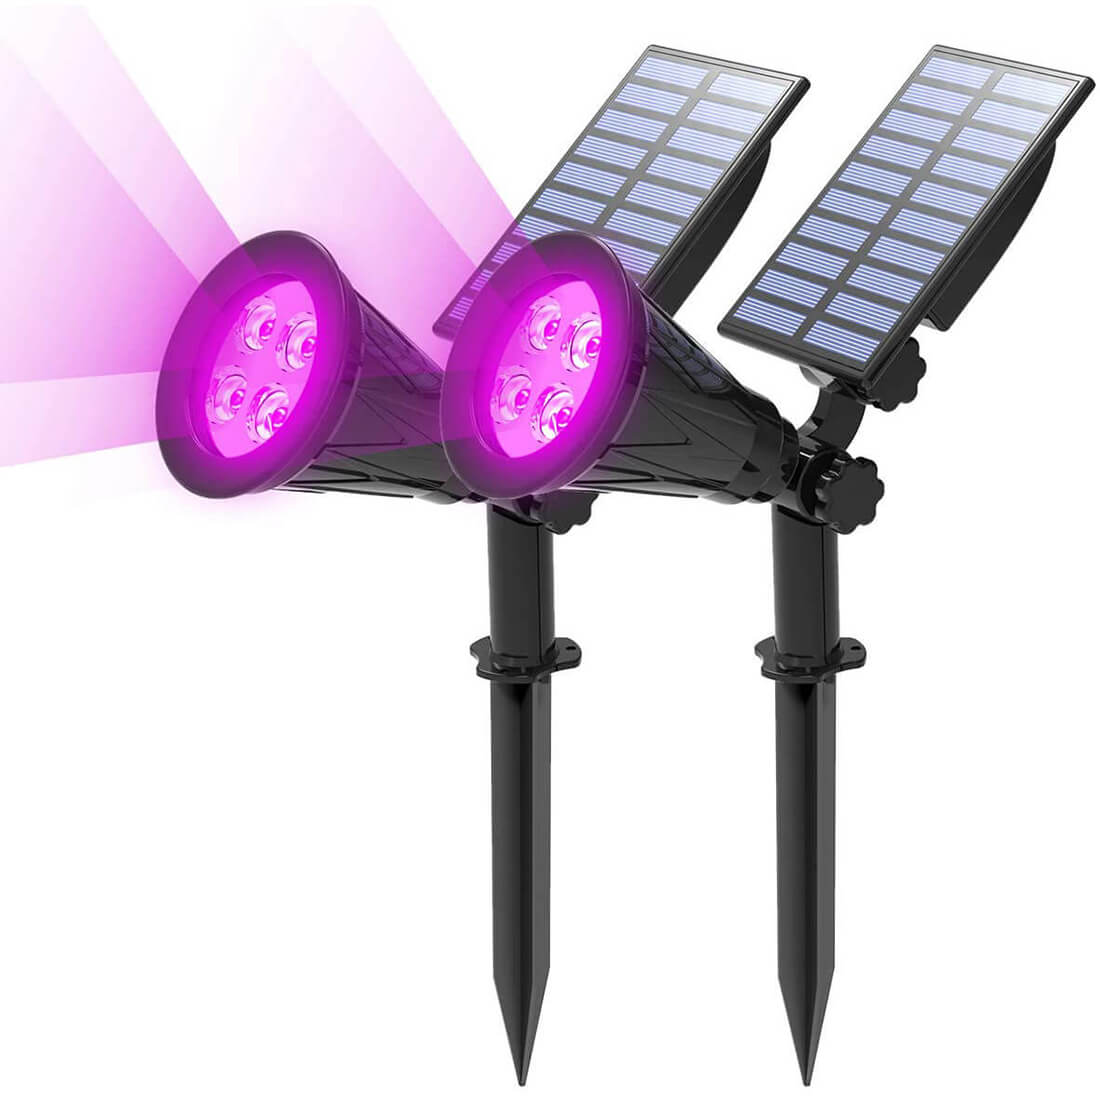 TSUN-purple-4-leds-Outdoor-Solar-Spot-Lights-2-pack